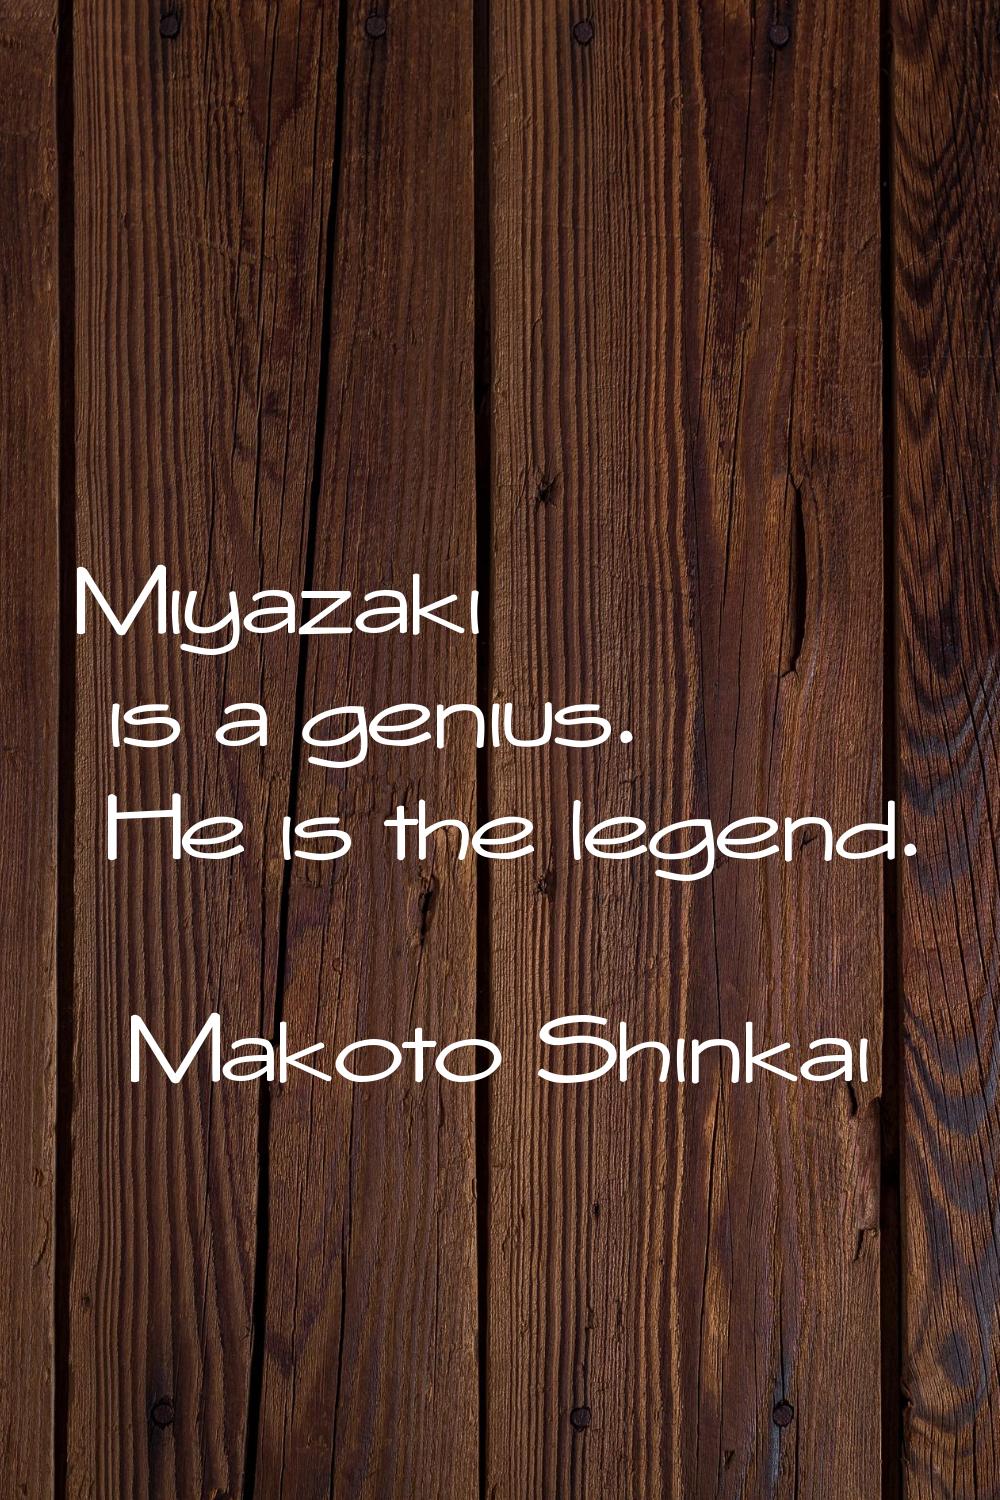 Miyazaki is a genius. He is the legend.